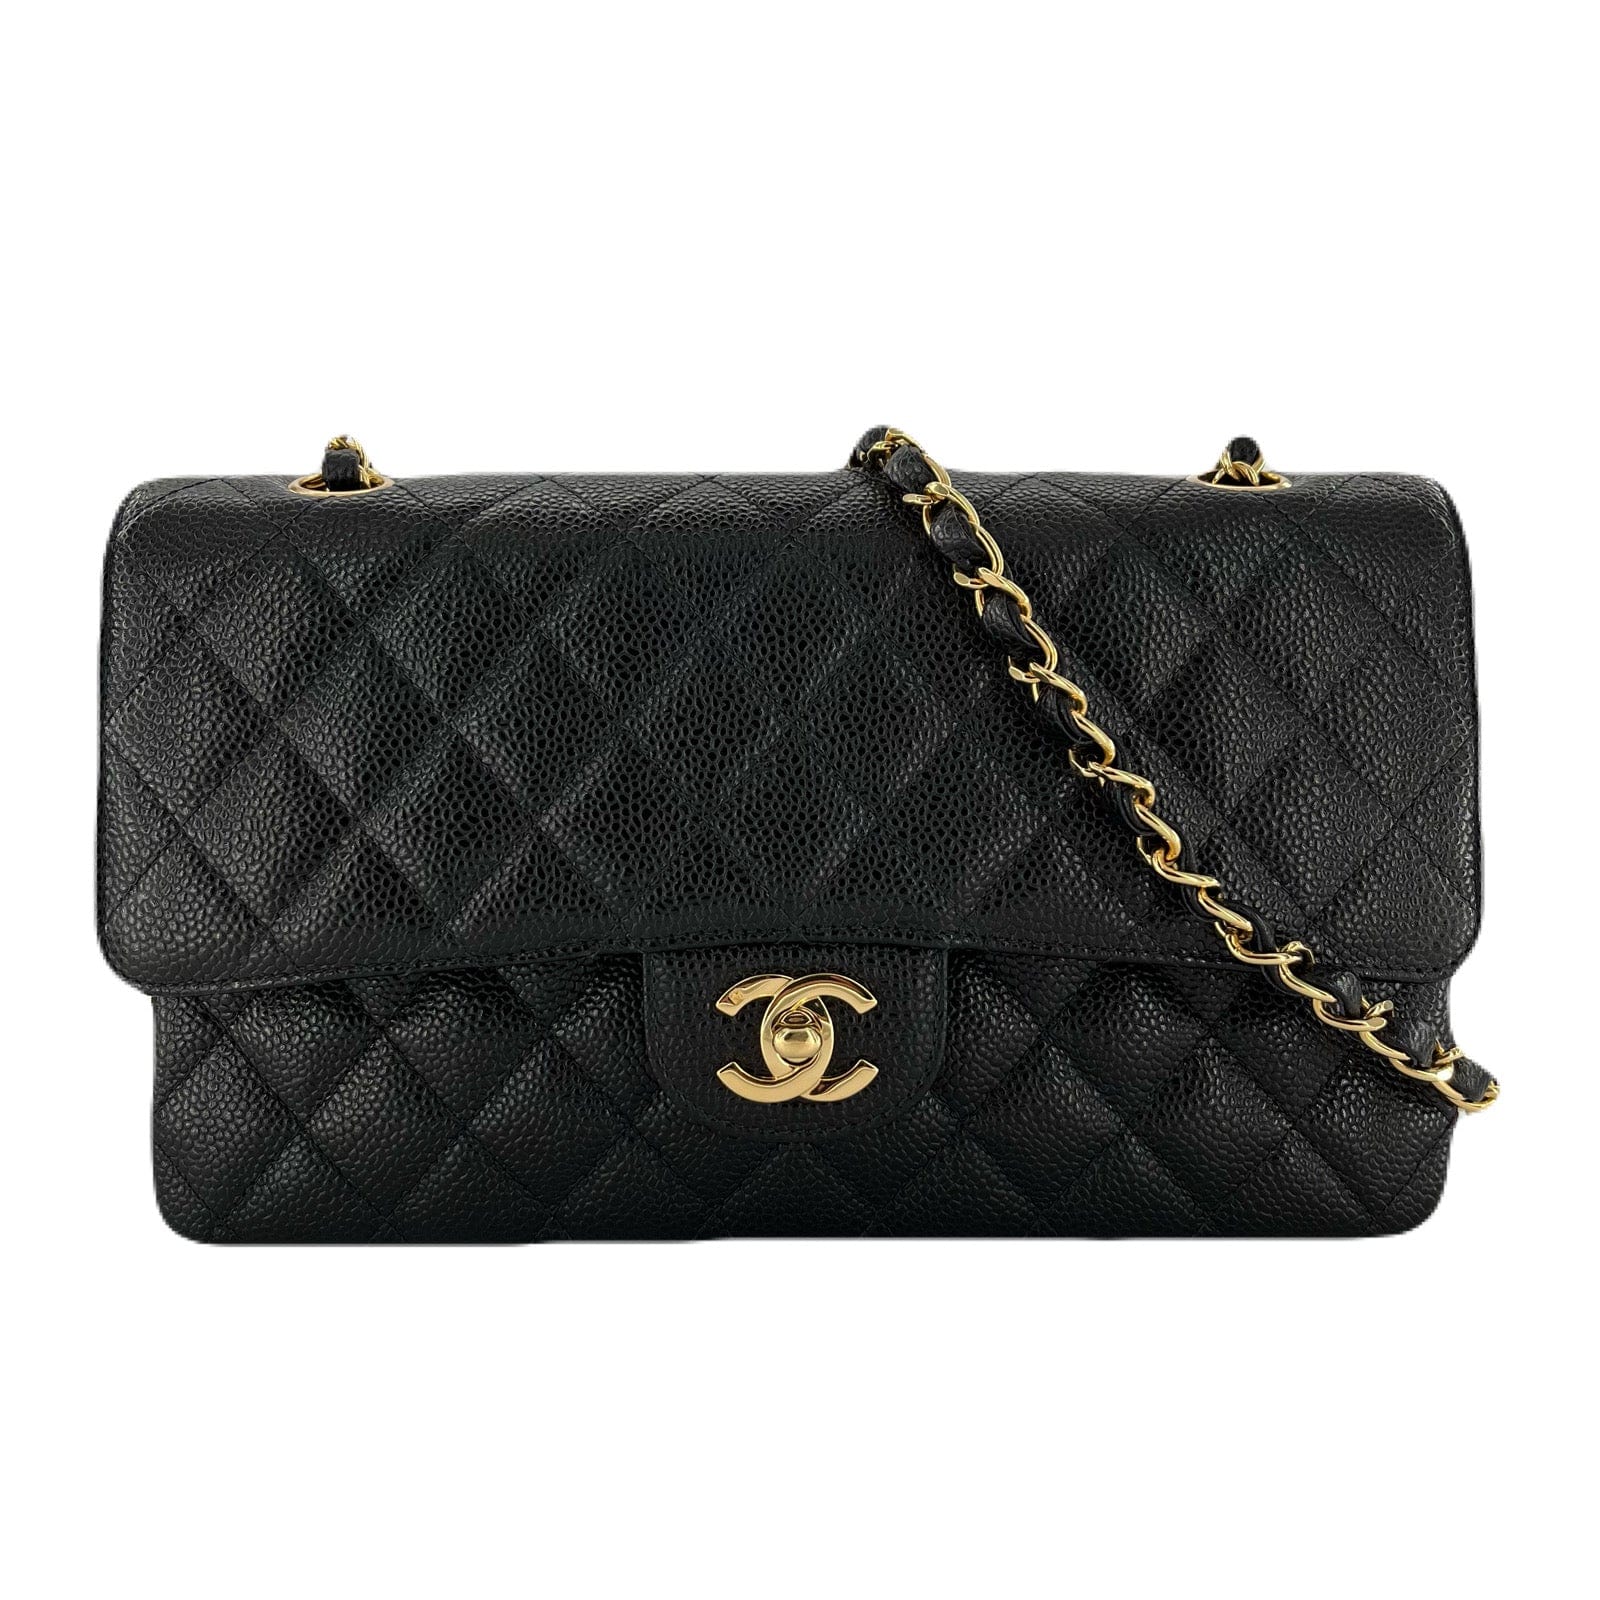 Chanel CHANEL VINTAGE CLASSIC FLAP MEDIUM CHAIN SHOULDER BAG BLACK CAVIAR SKIN